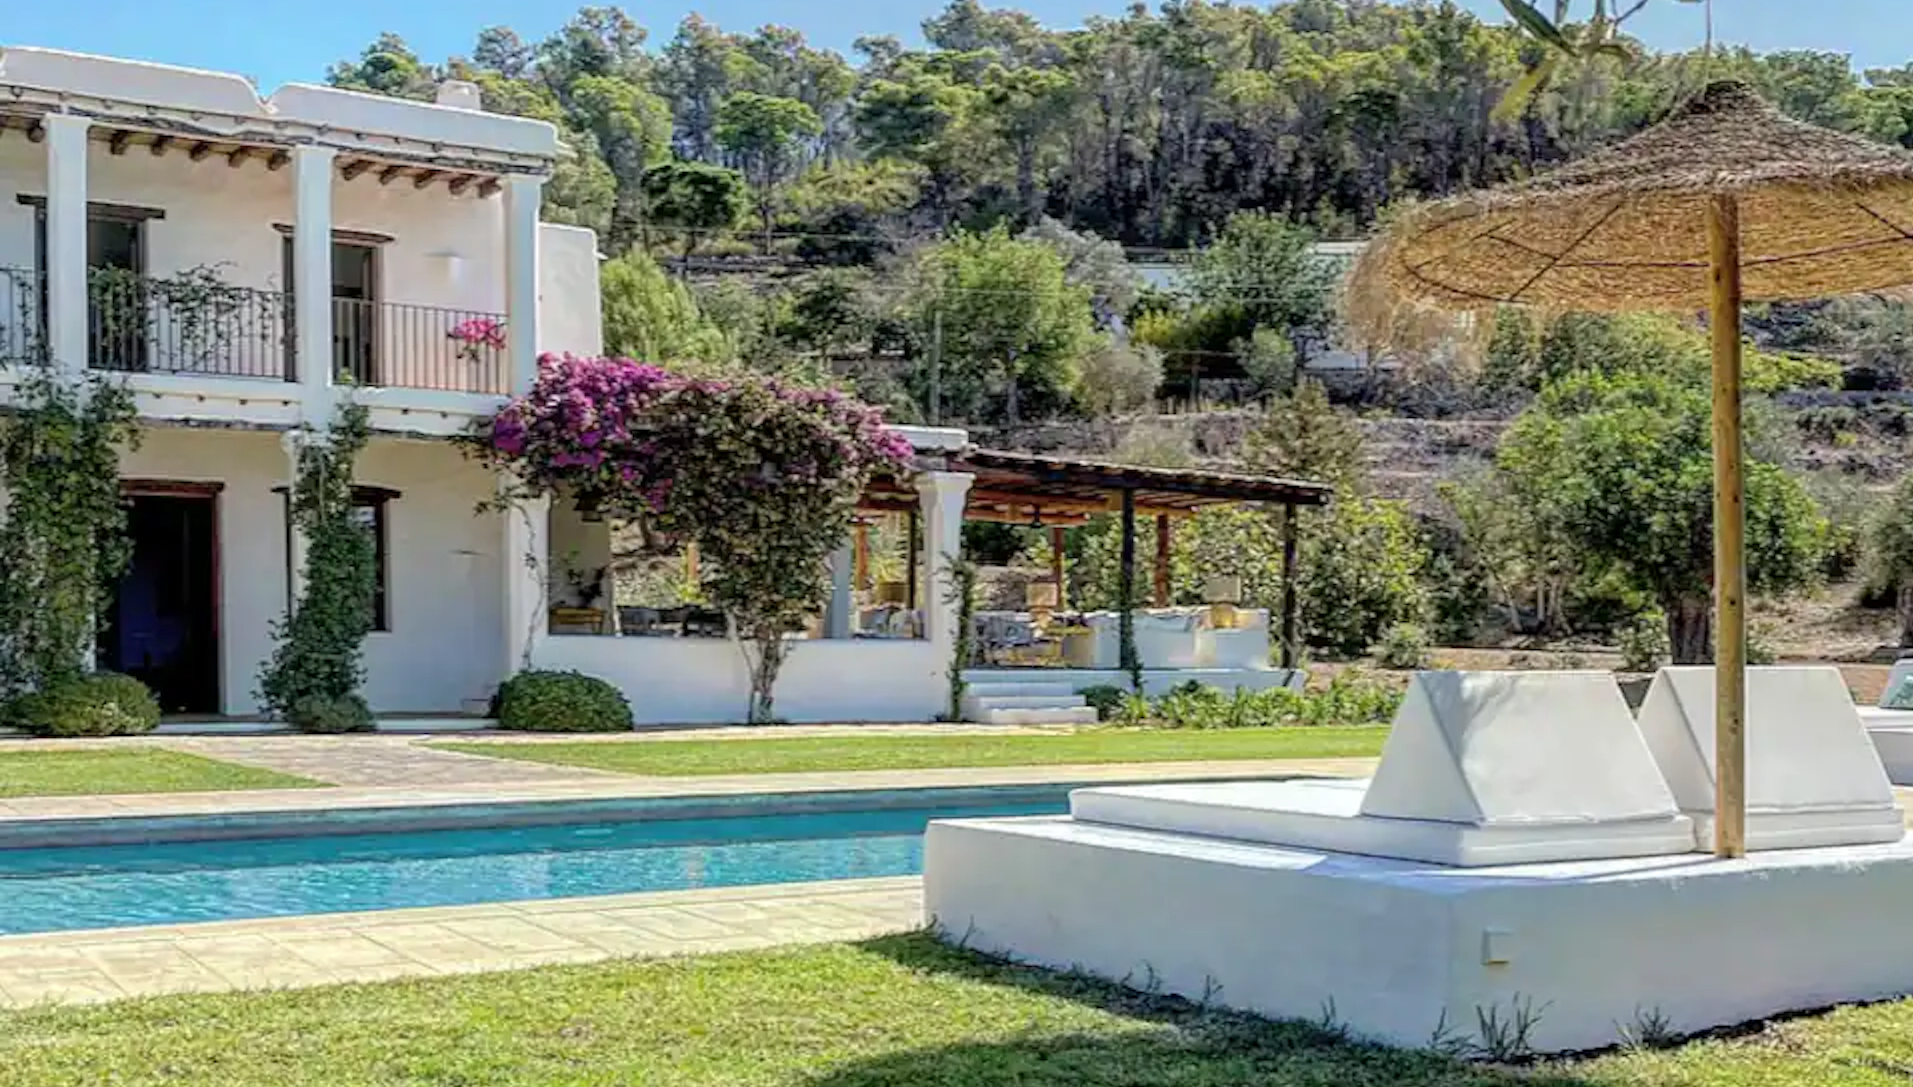 5 bedroom farmhouse, blackstad architecture, in the heart of Ibiza.